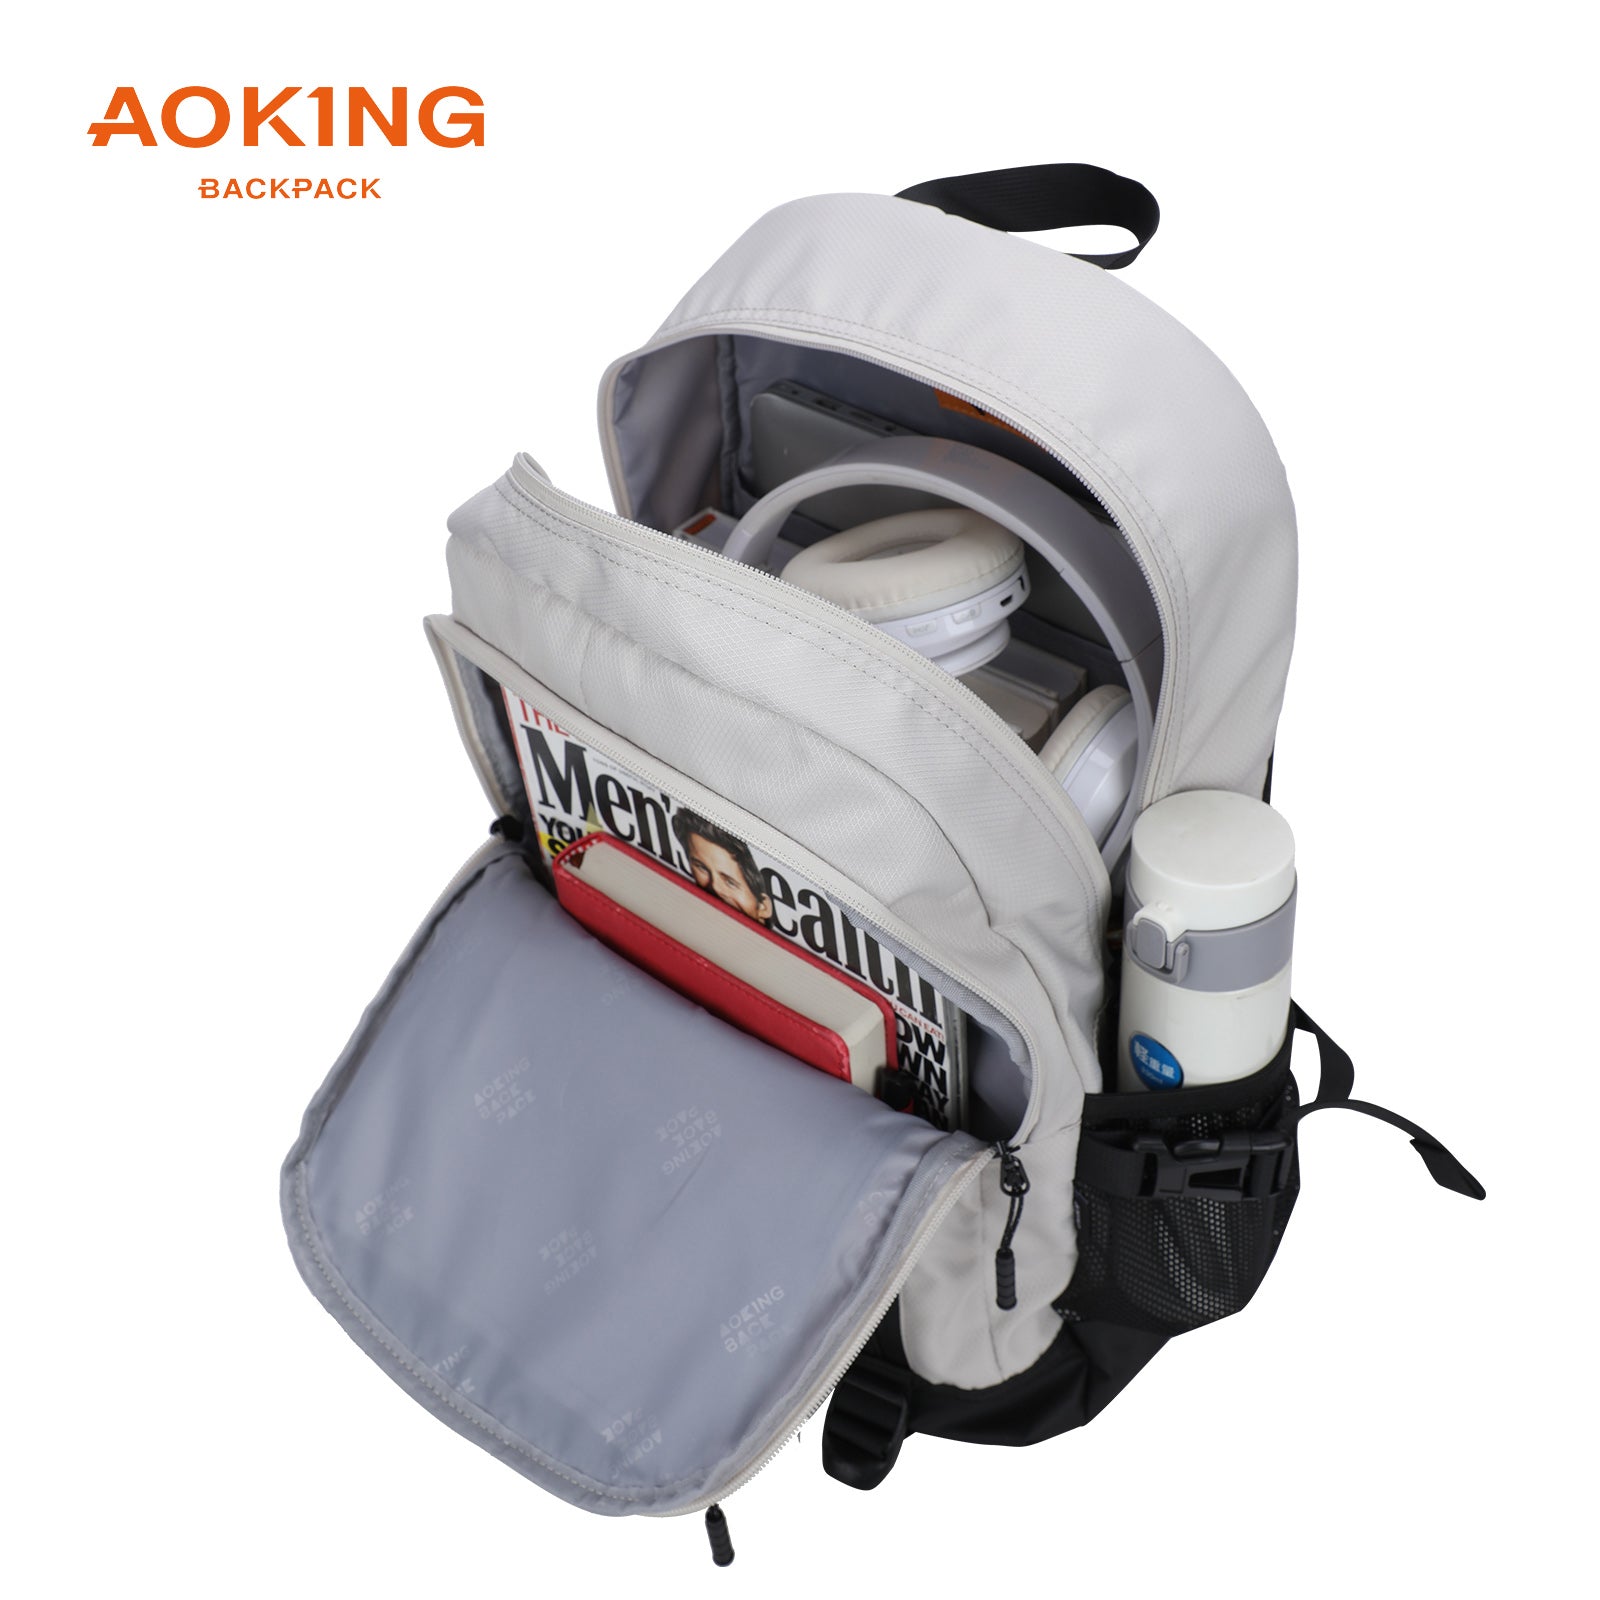 Aoking Lightweight Casual Sport Outdoor Backpack XN3369